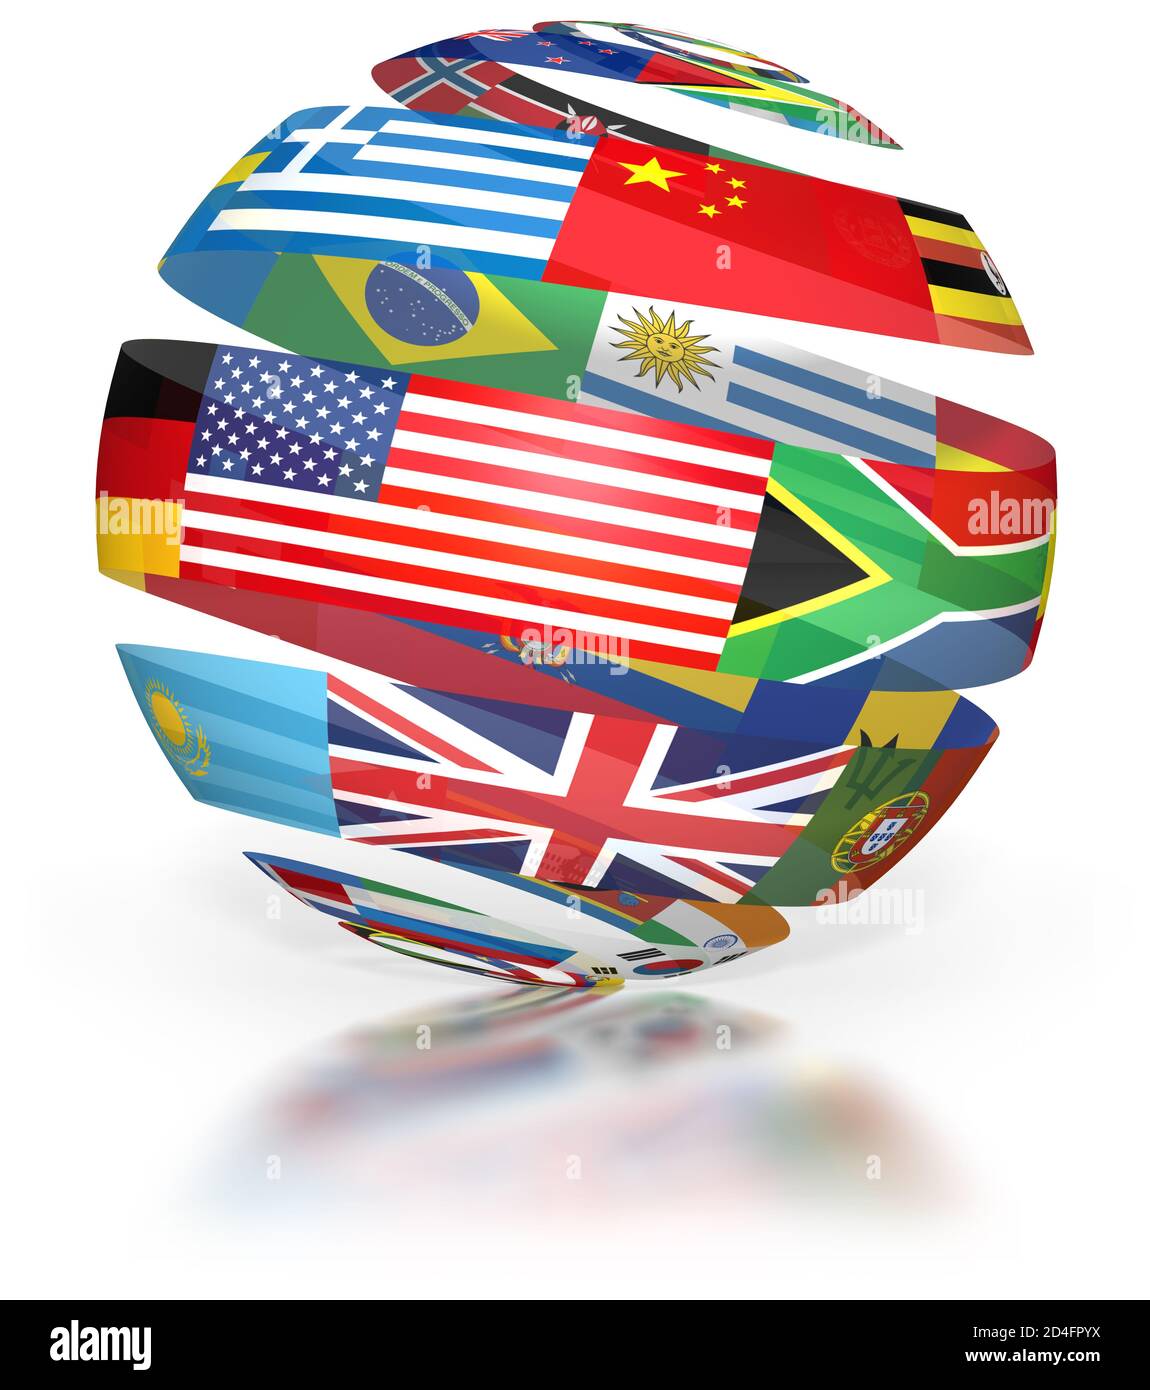 Globe of world flags, spiral showing international symbols, ribbon white background Stock Photo